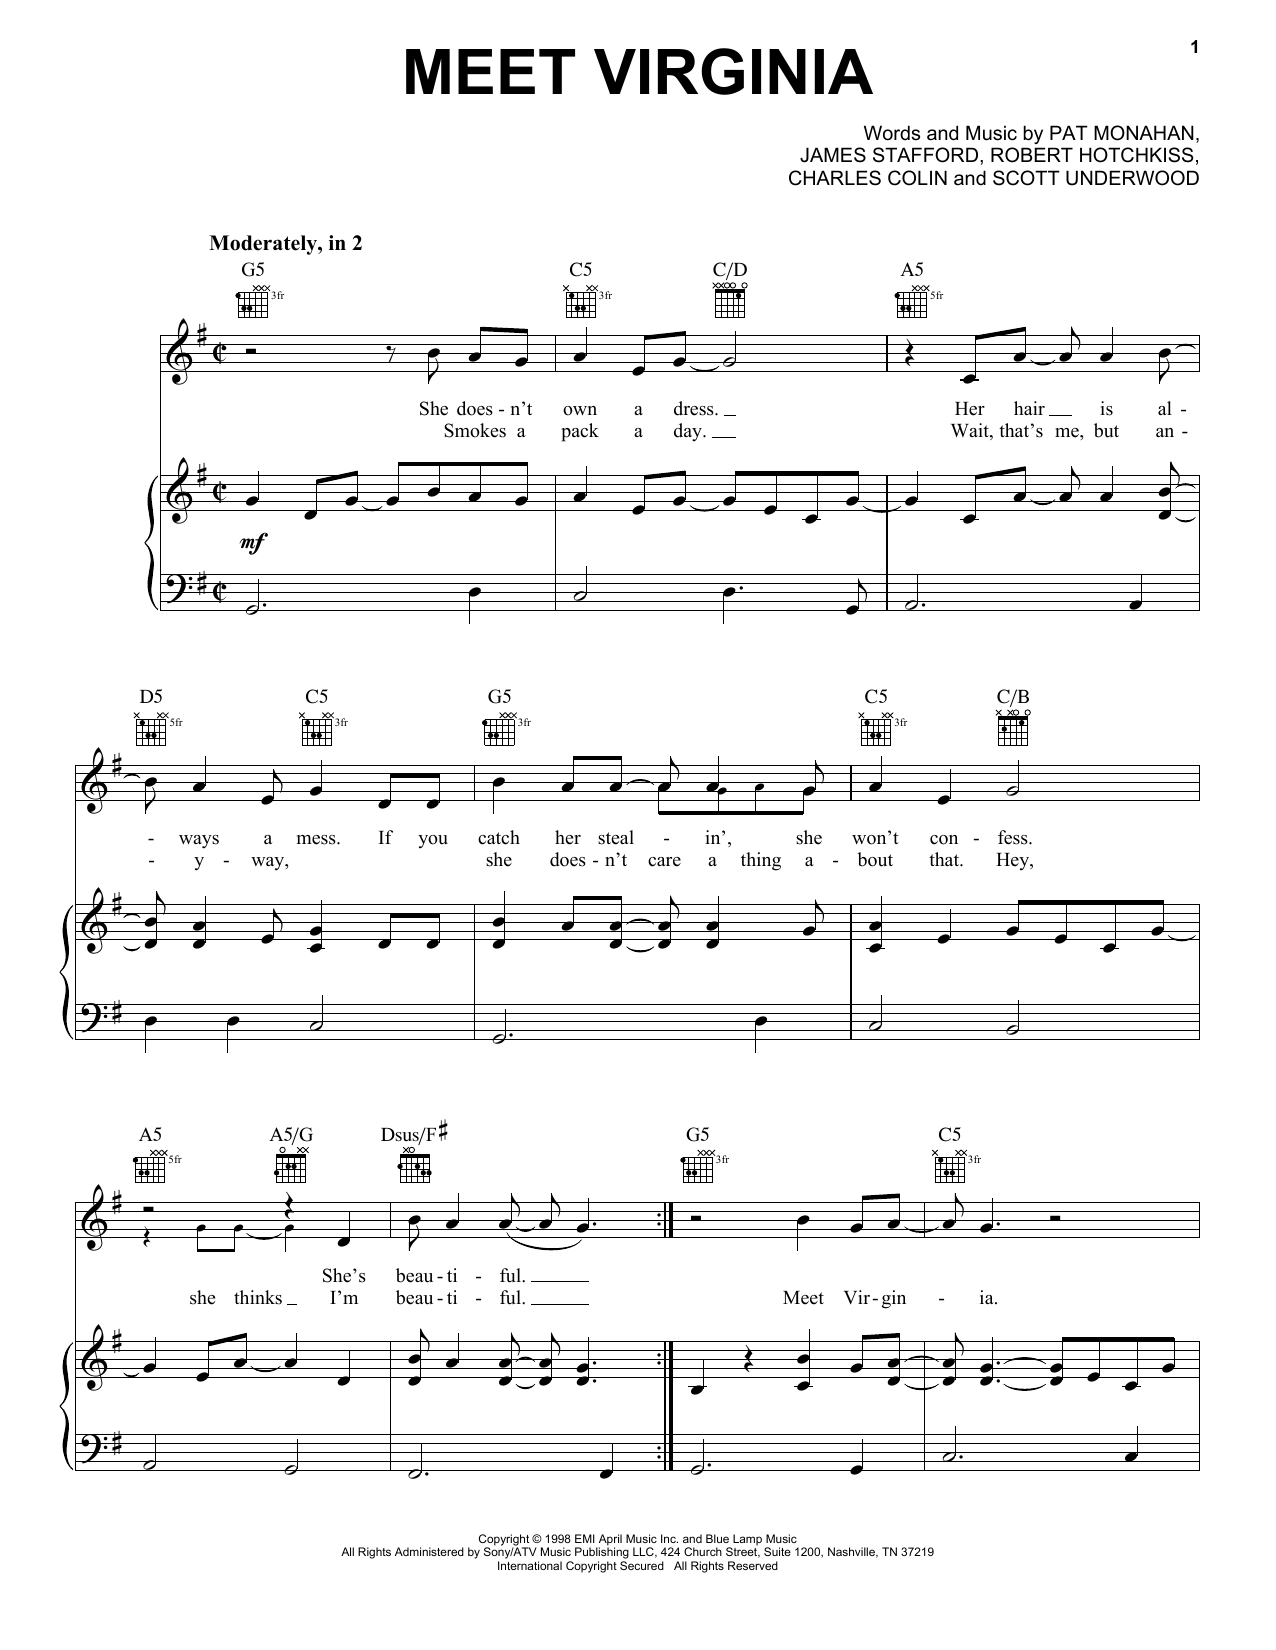 Train Meet Virginia sheet music notes and chords. Download Printable PDF.